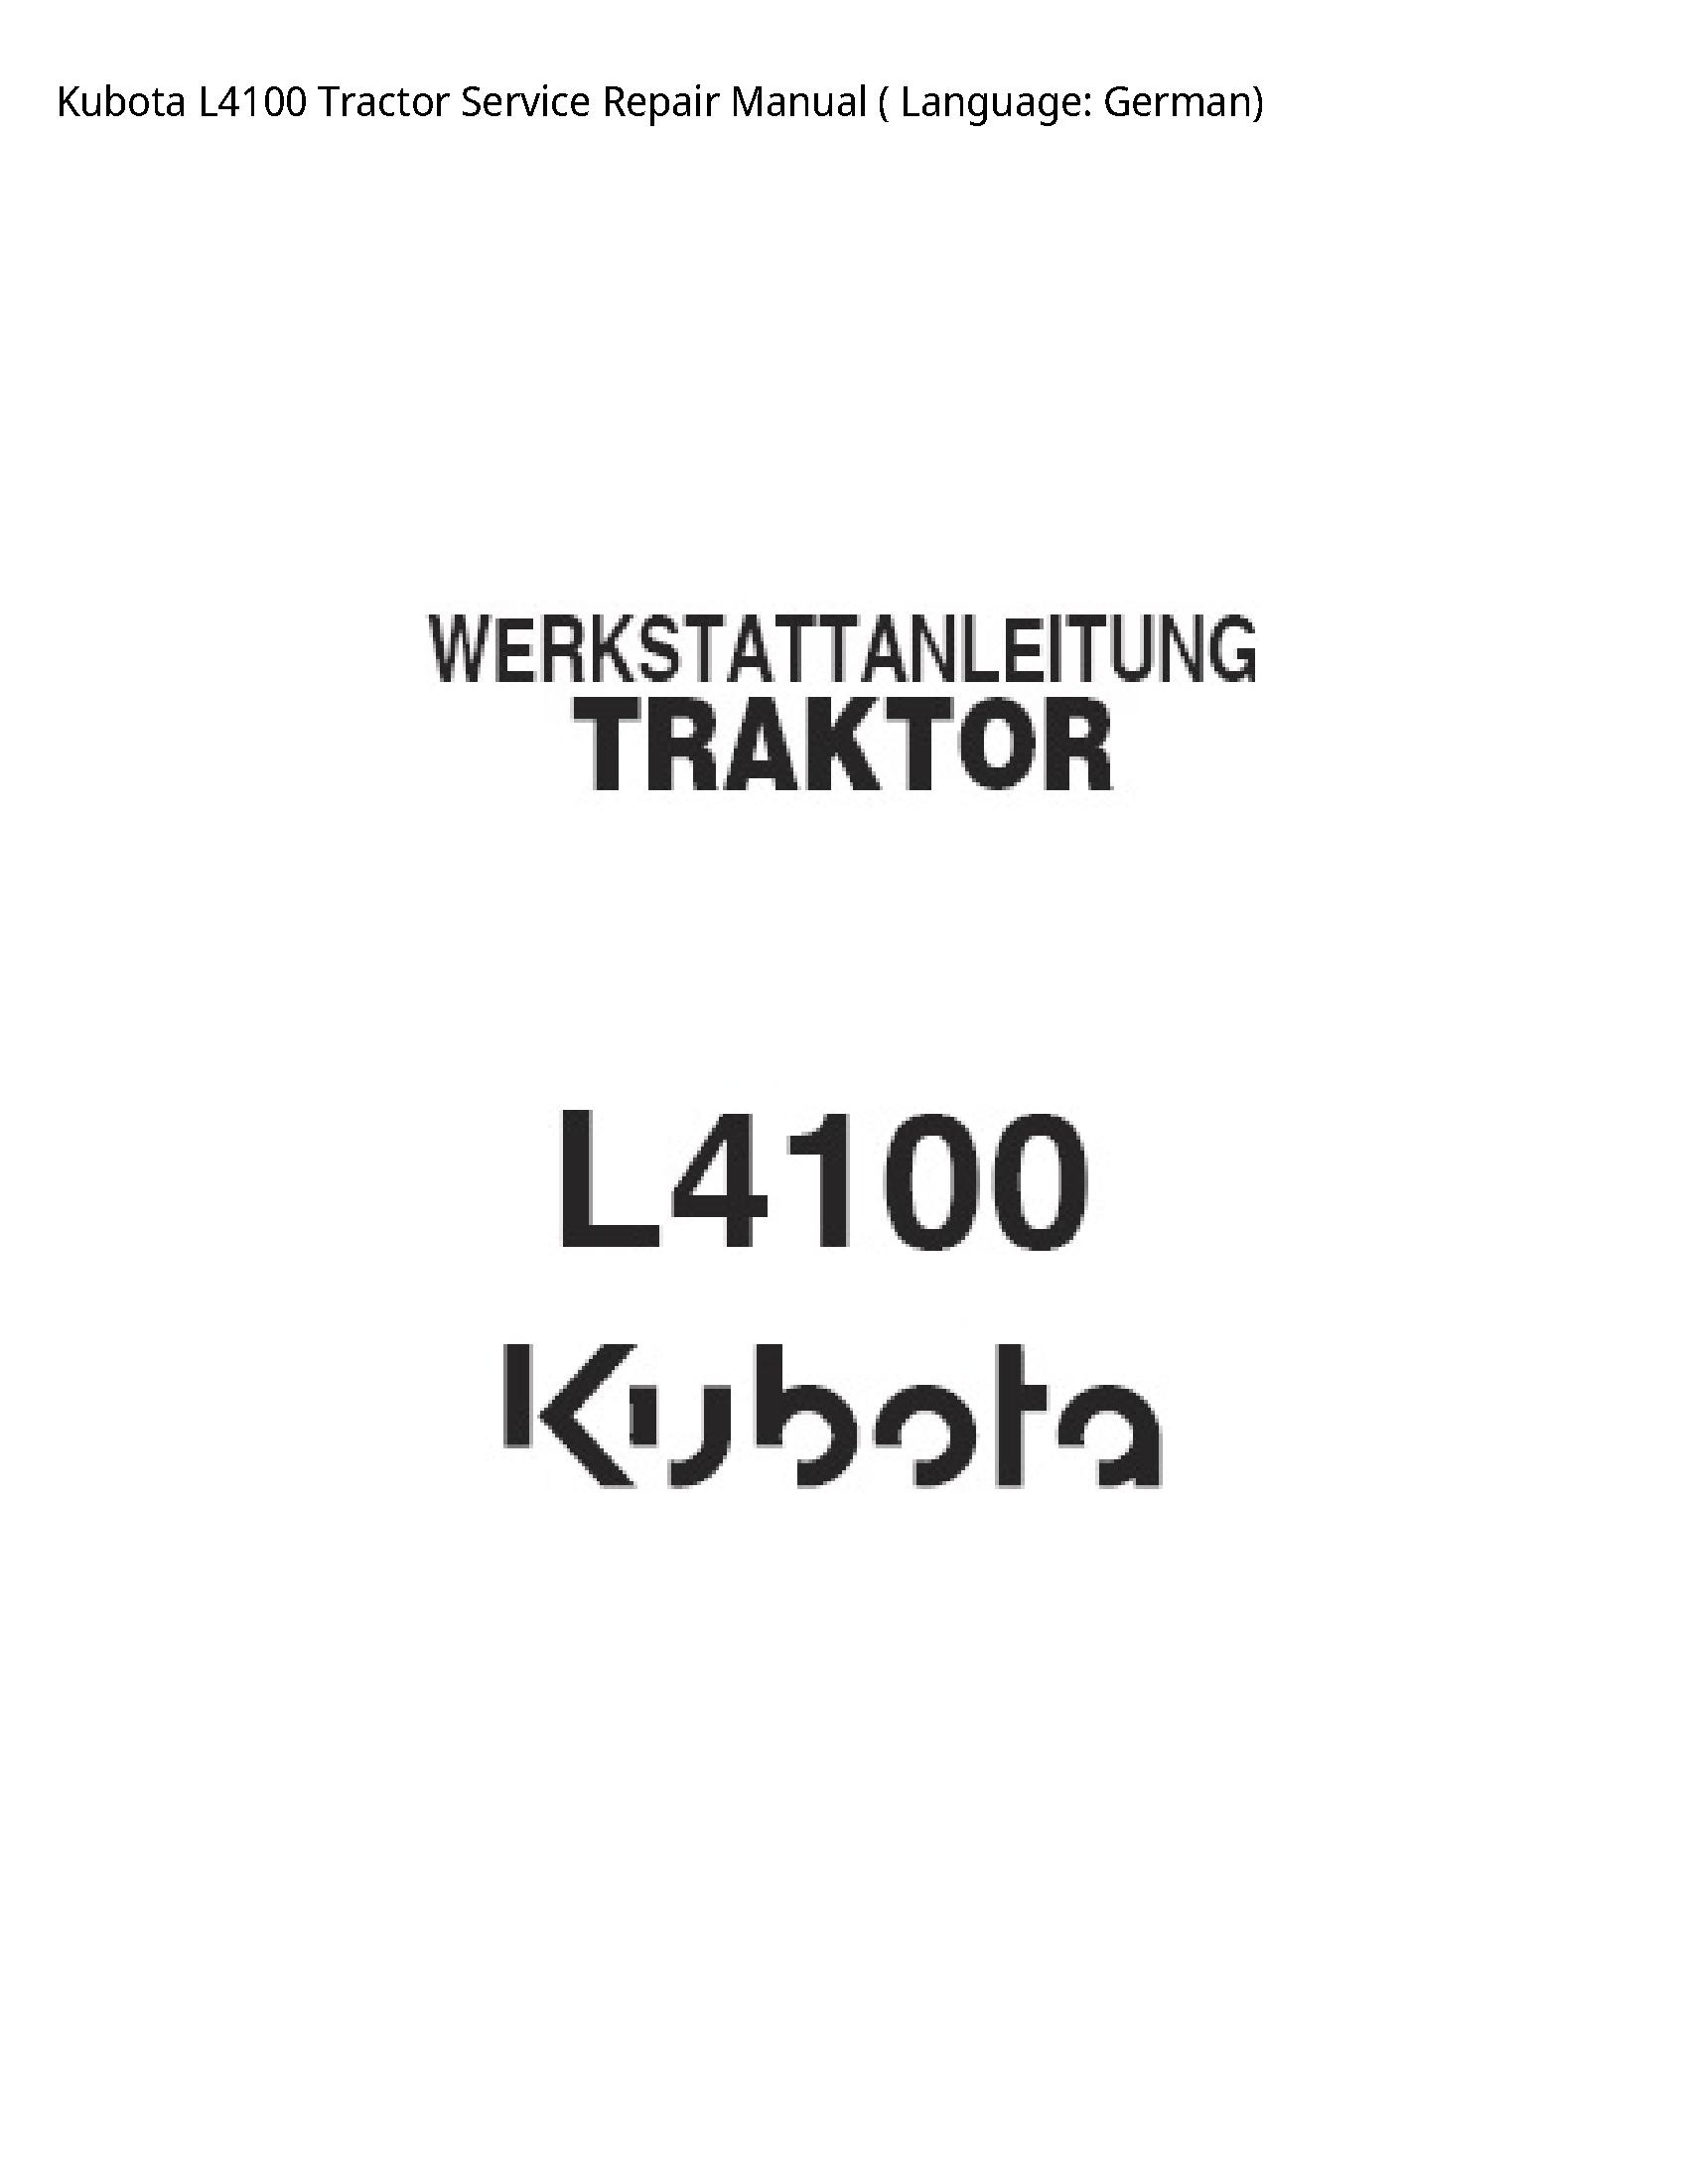 Kubota L4100 Tractor manual